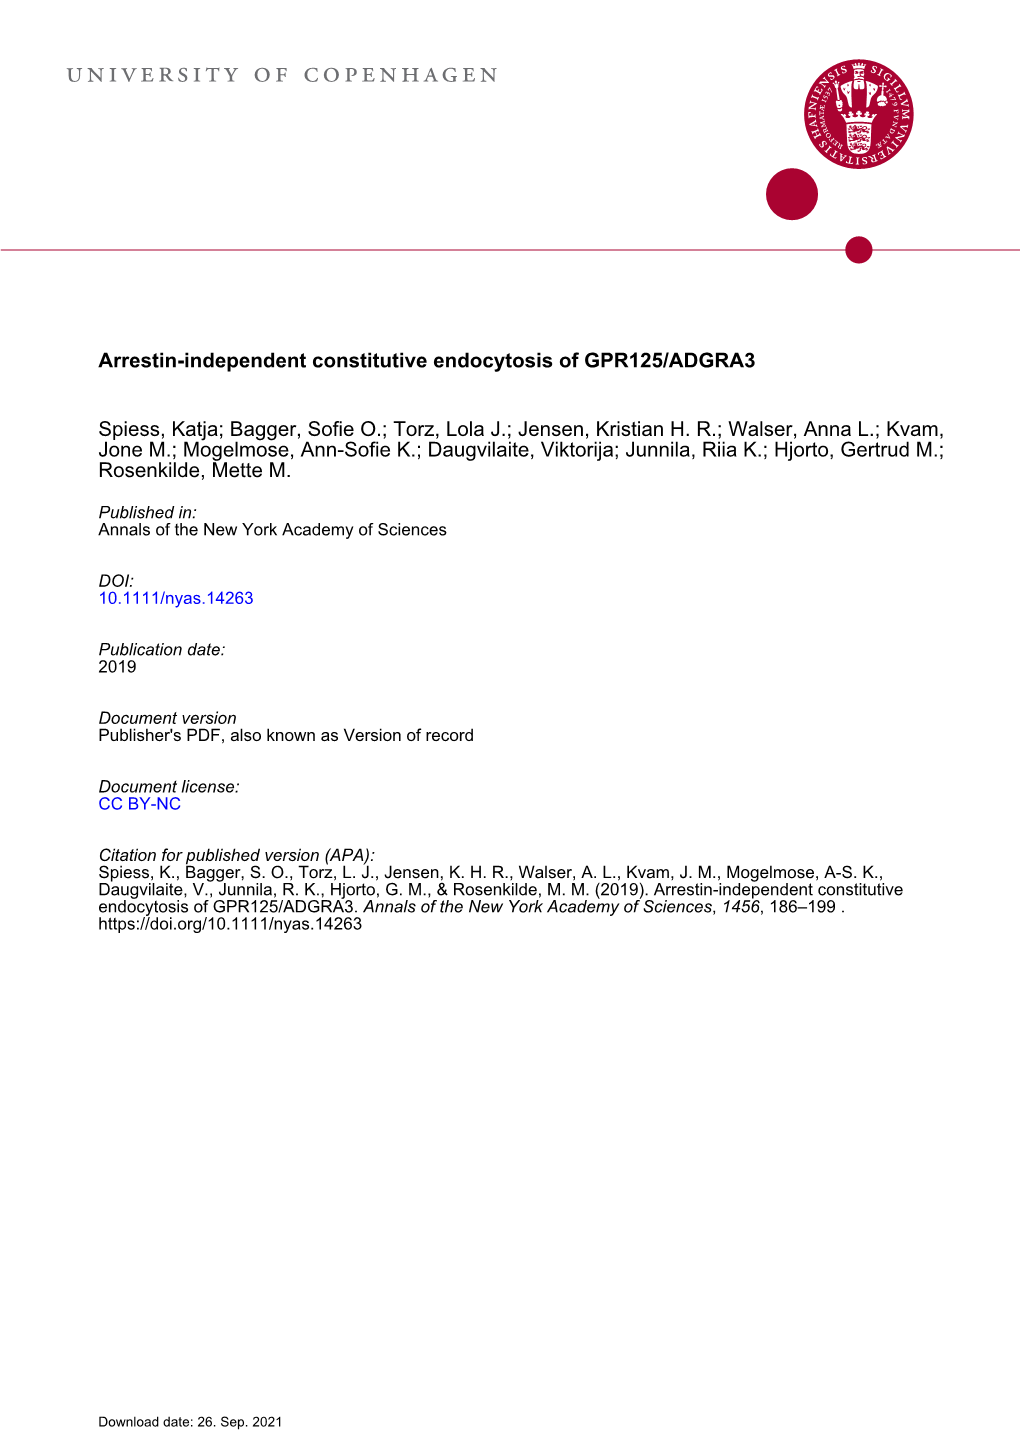 Independent Constitutive Endocytosis of GPR125/ADGRA3